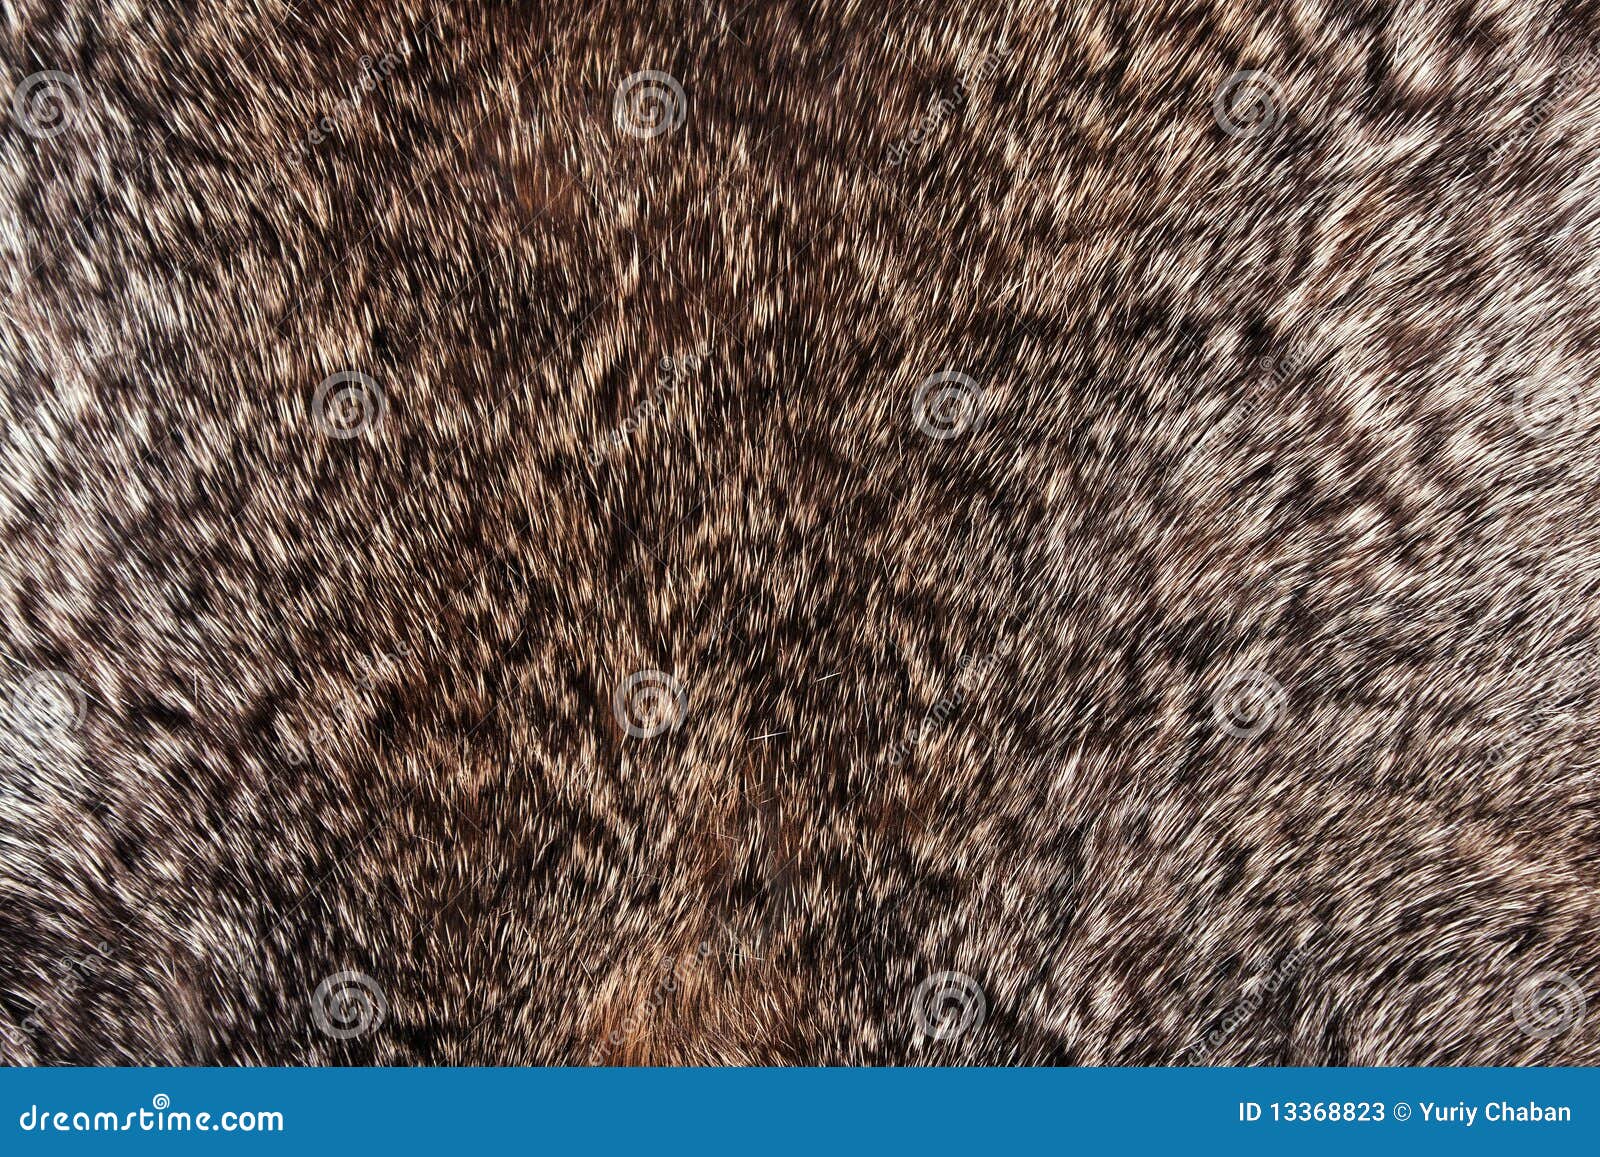 rabbit fur texture